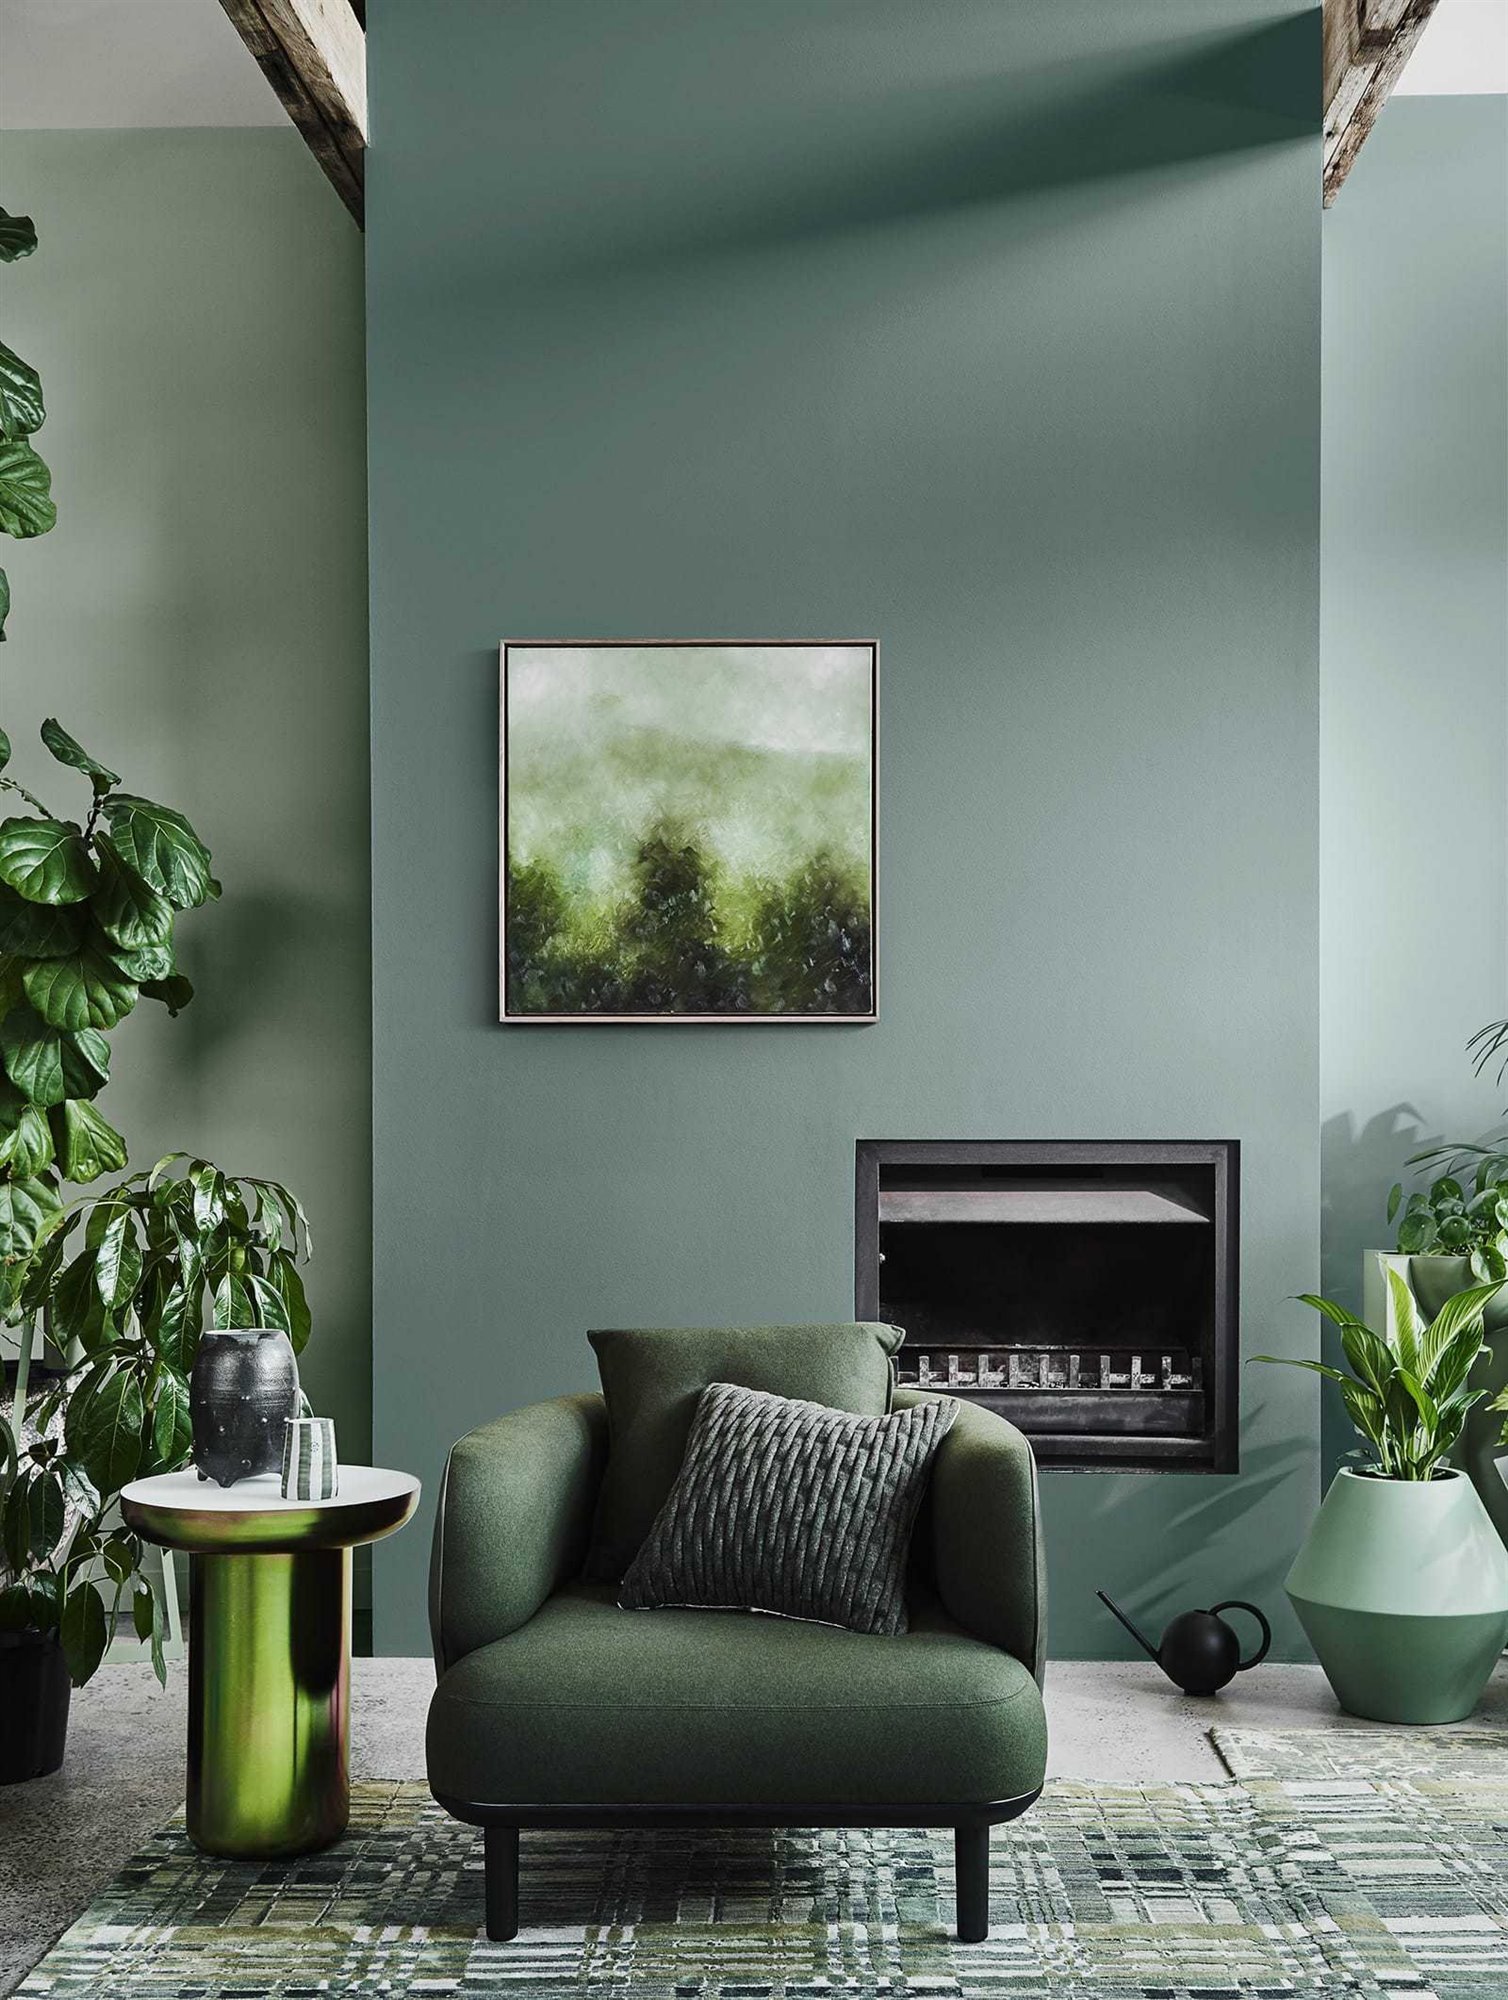 Salon con chimenea en color verde. Antidepresivo natural